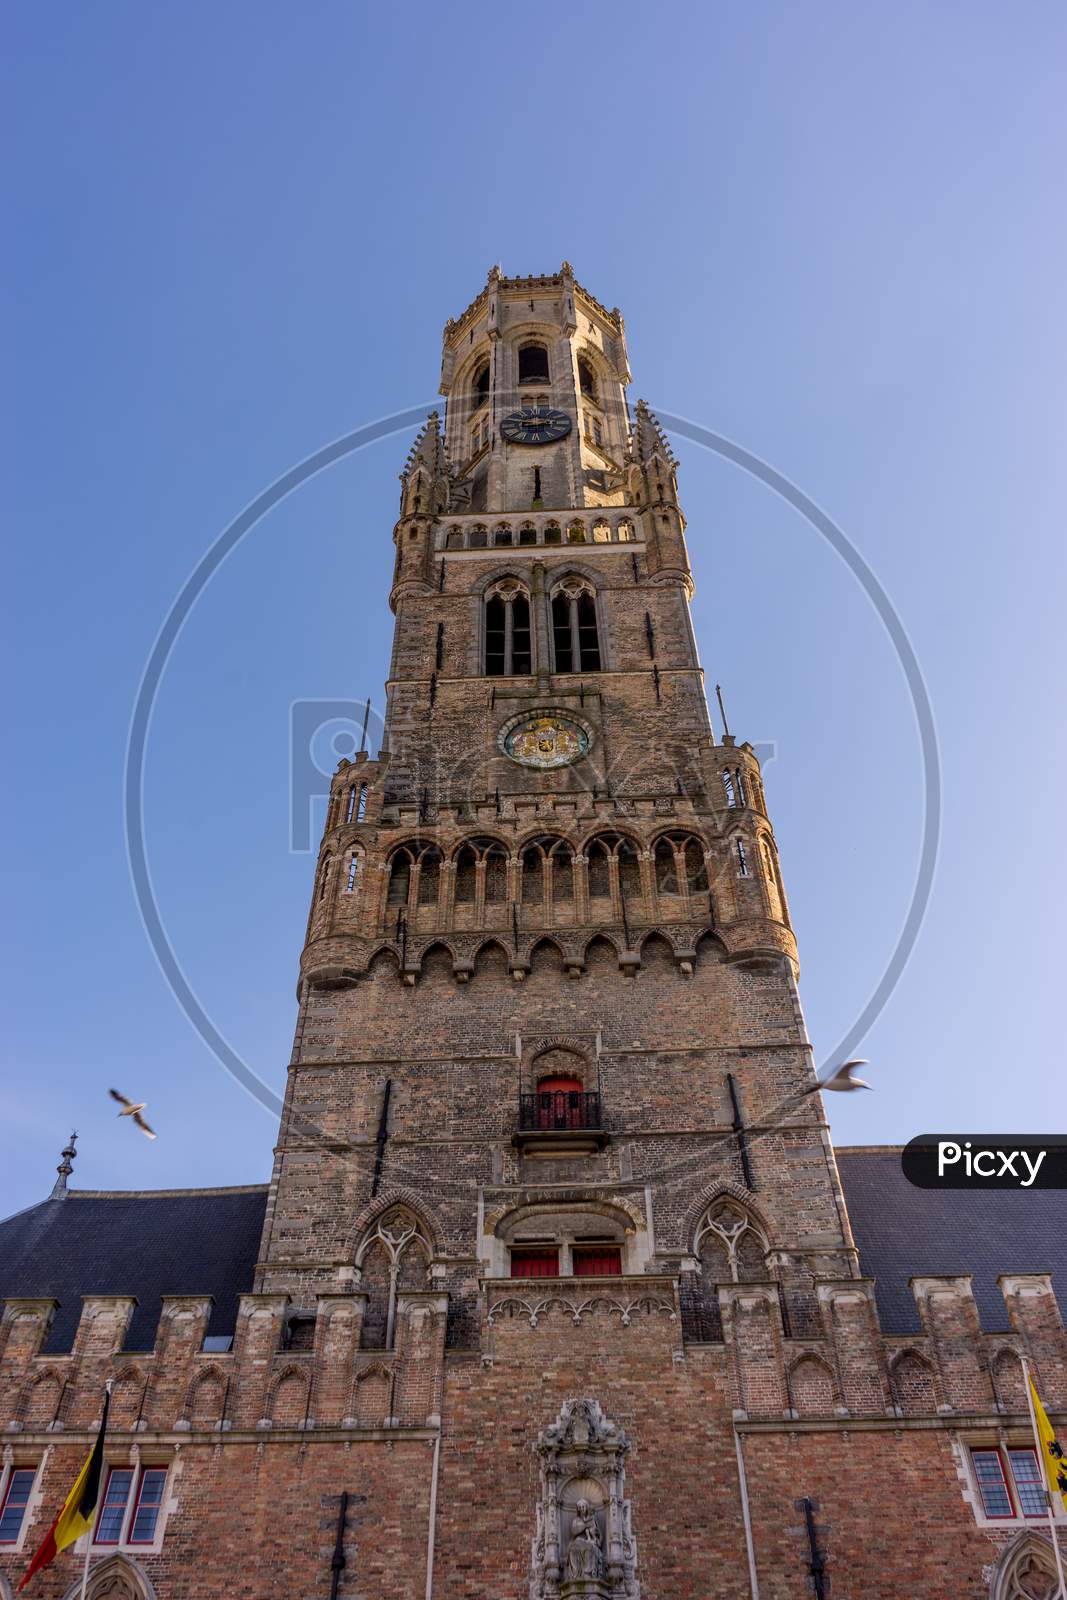 Bruges, Belgium - 17 February 2018: The Belfry Tower In Bruges